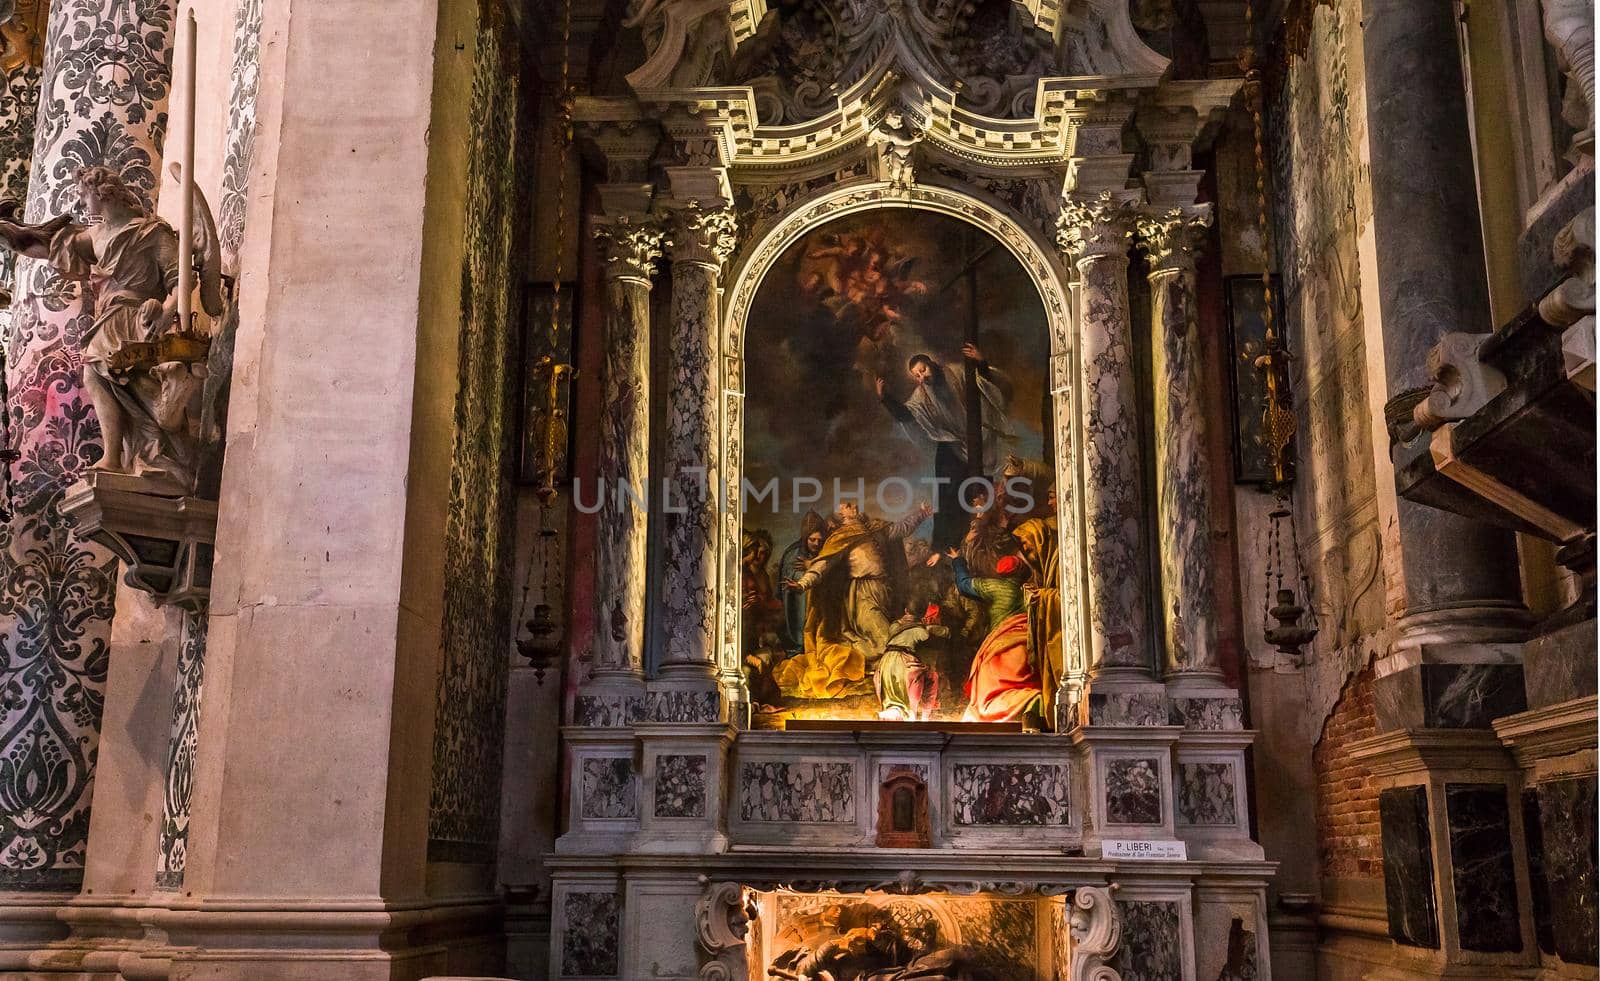 interiors of chiesa I Gesuiti, Venice, Italy by photogolfer